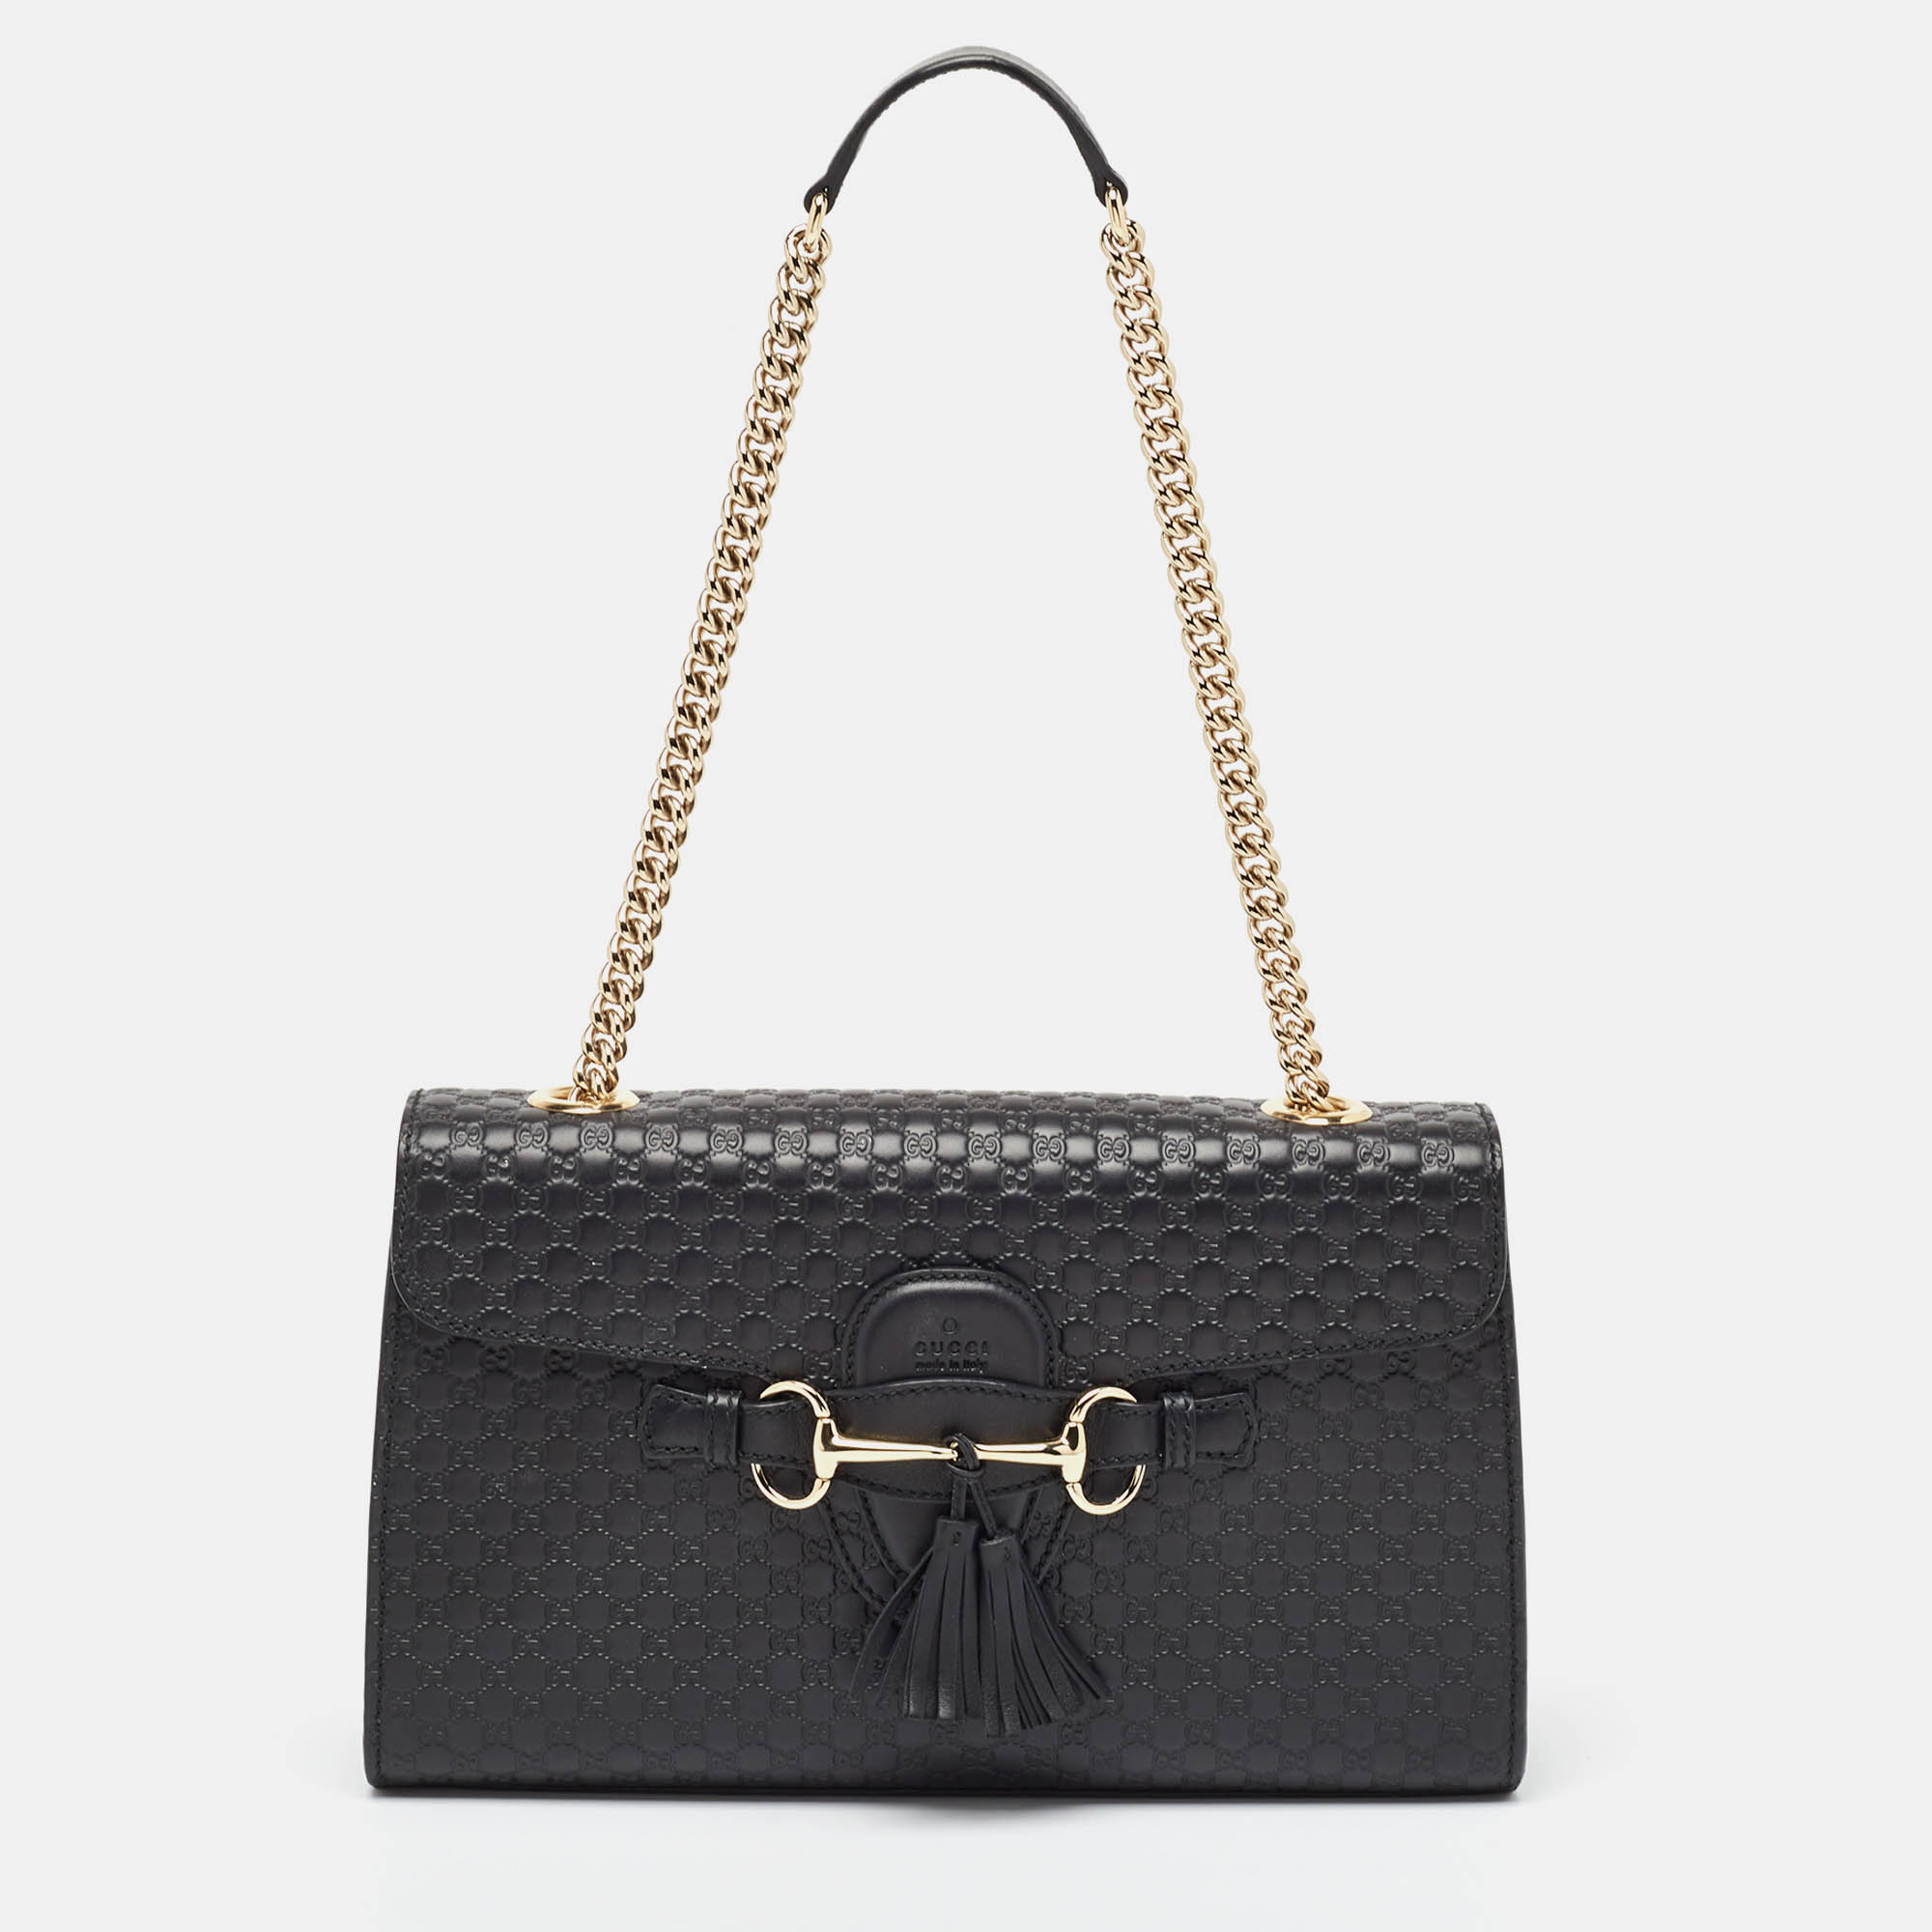 Gucci Black Microguccissima Leather Medium Emily Shoulder Bag